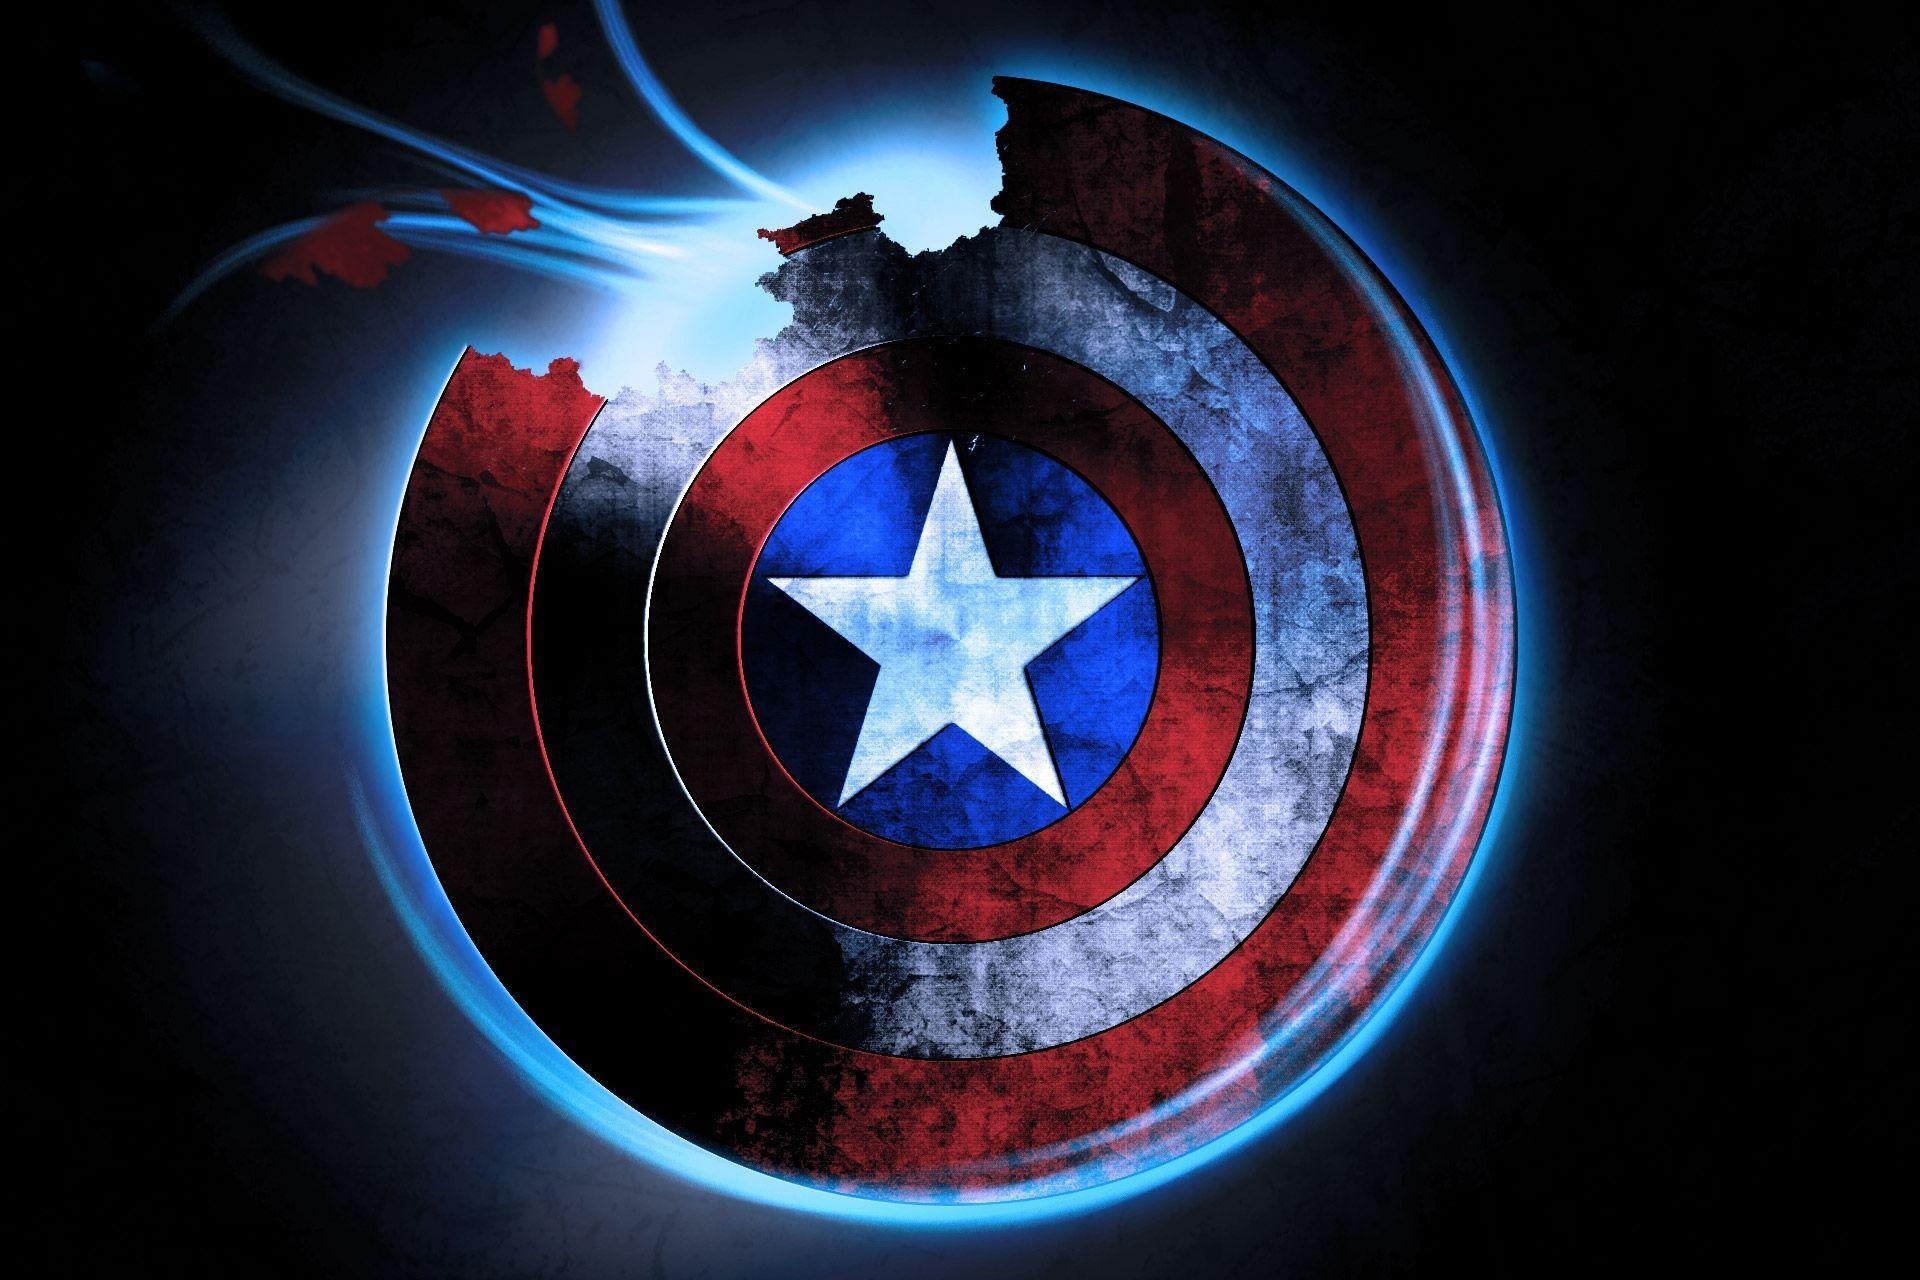 Civil War Captain America 4K Ultra HD Background Wallpaper. I'm